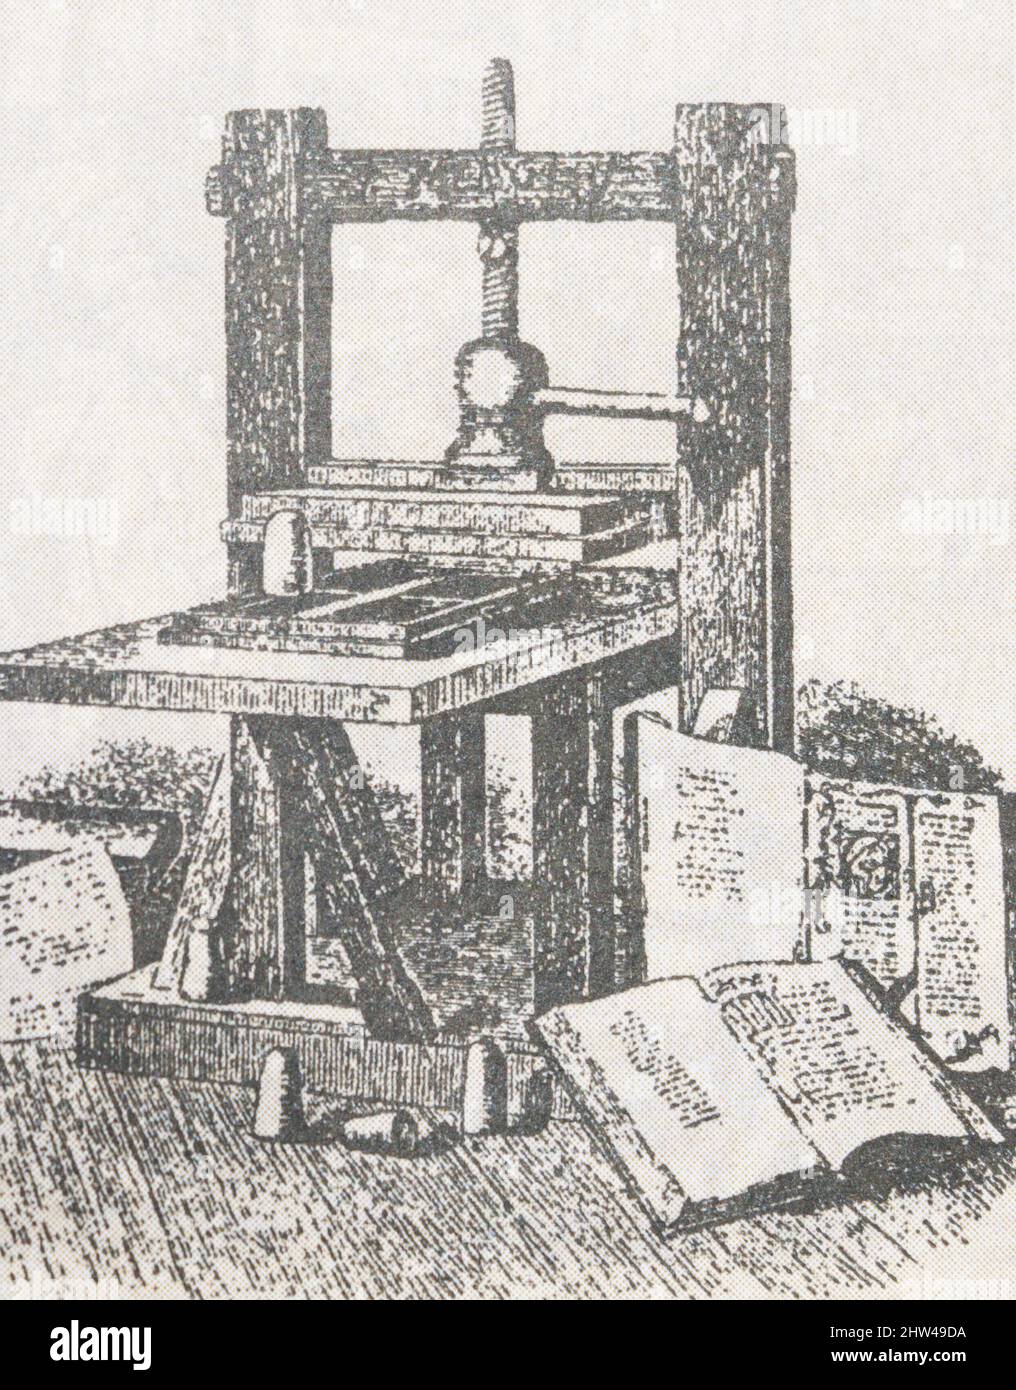 Johannes Gutenberg's printing press. Medieval engraving. Stock Photo